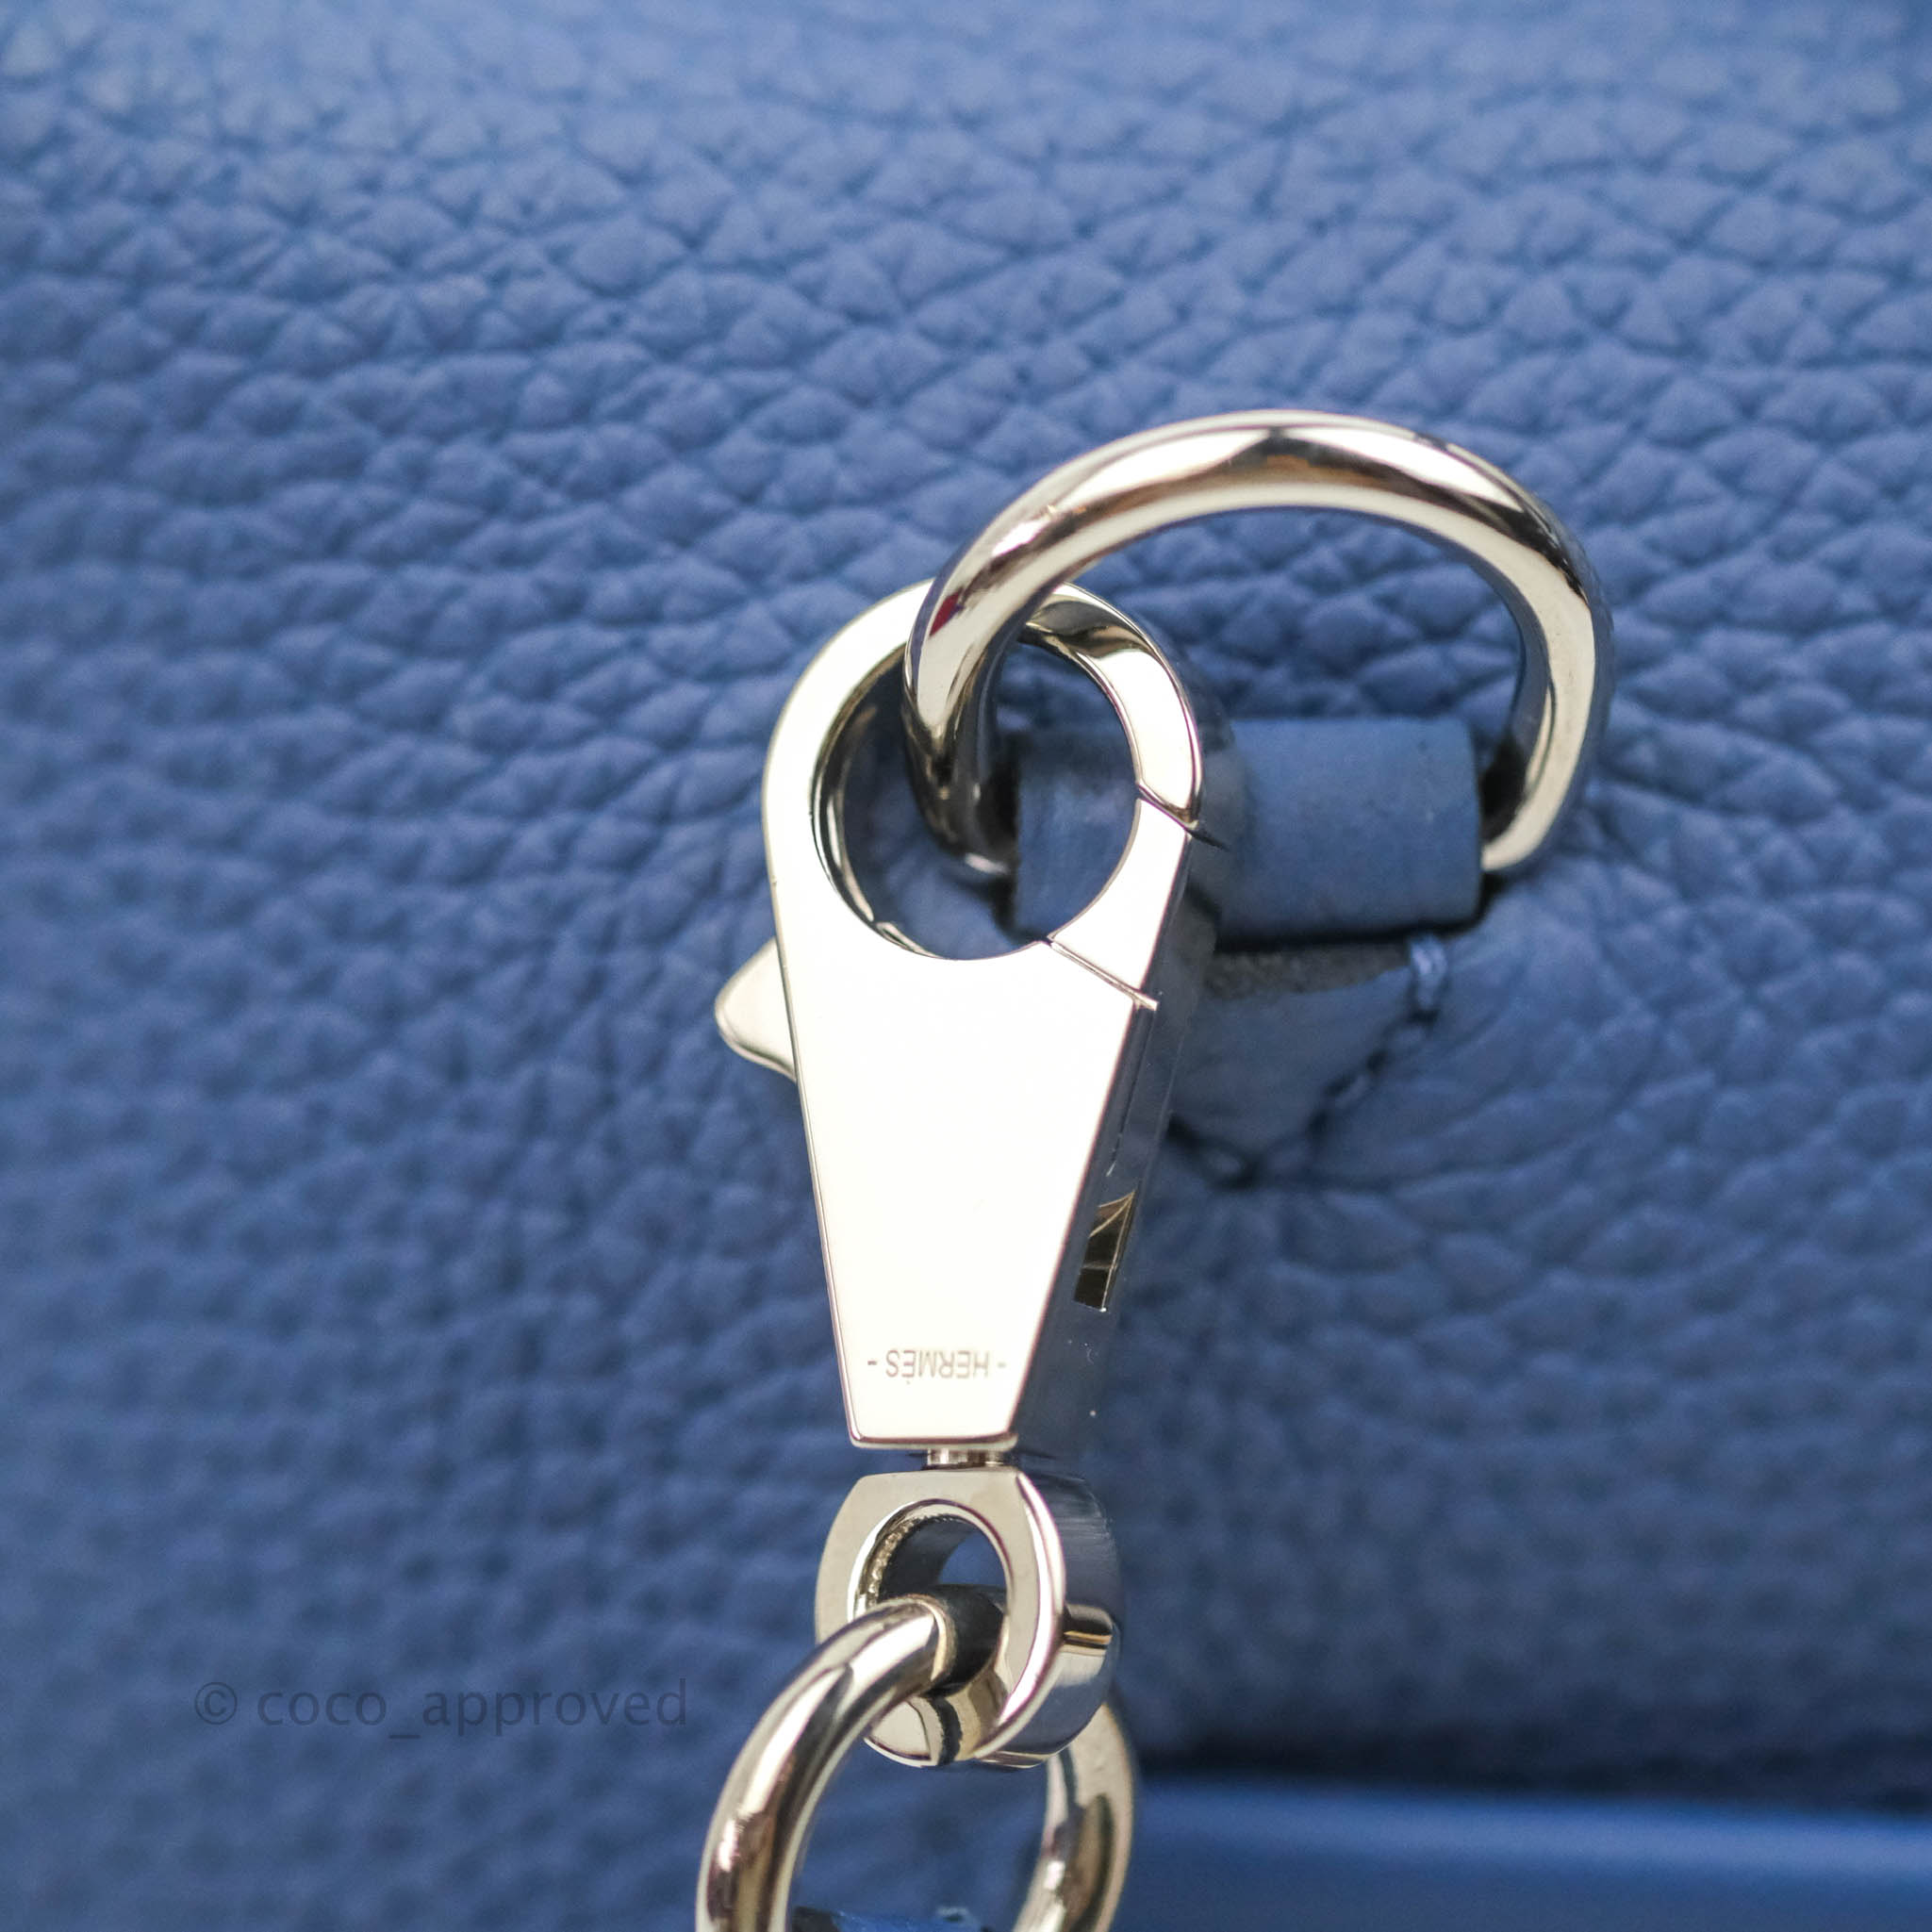 Hermes Blue Brighton Swift Leather Palladium Hardware Mini Berline Bag